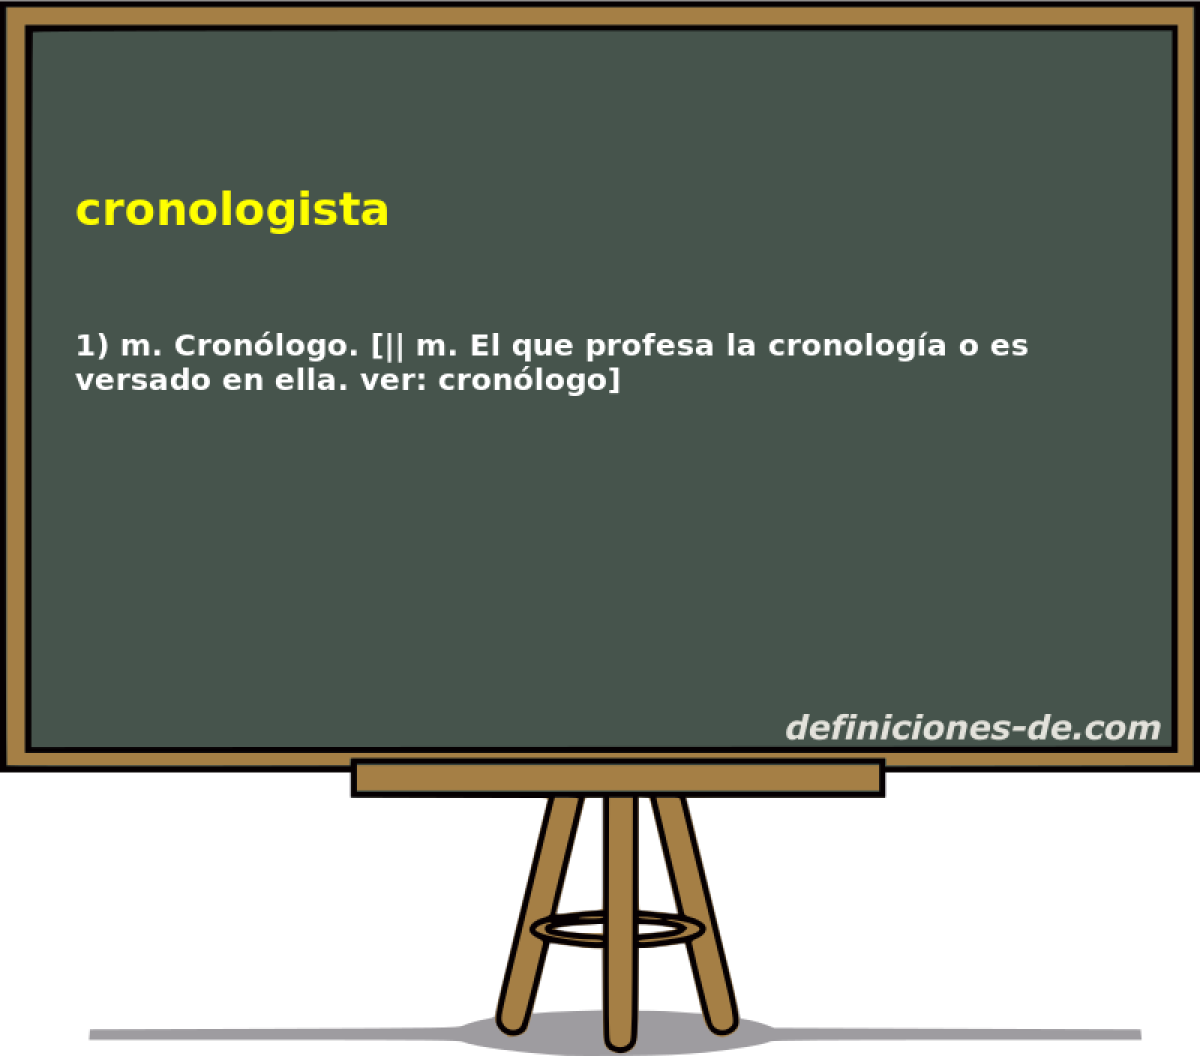 cronologista 